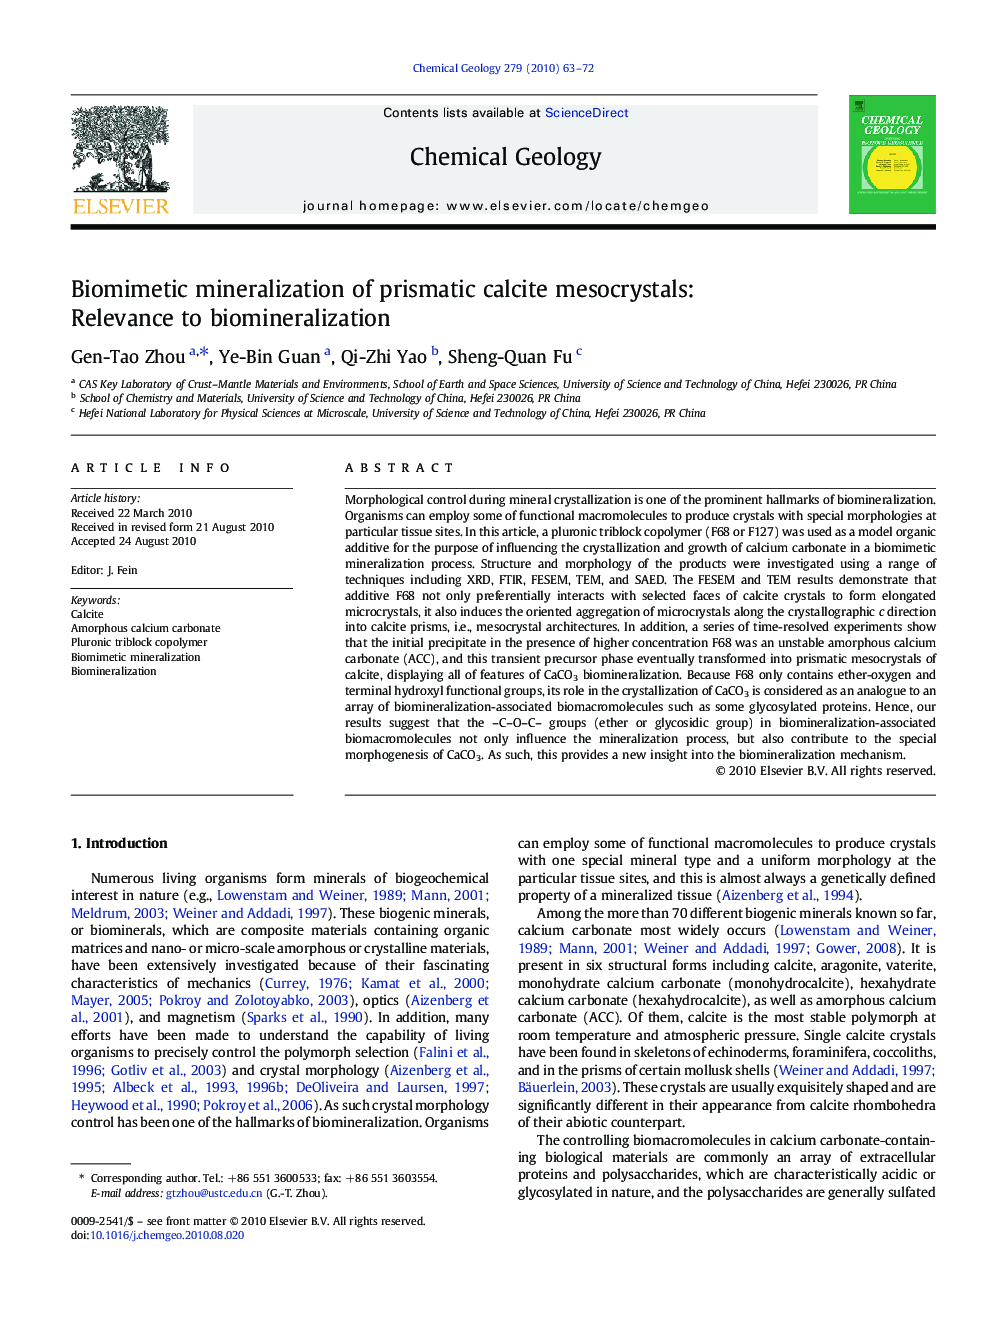 Biomimetic mineralization of prismatic calcite mesocrystals: Relevance to biomineralization